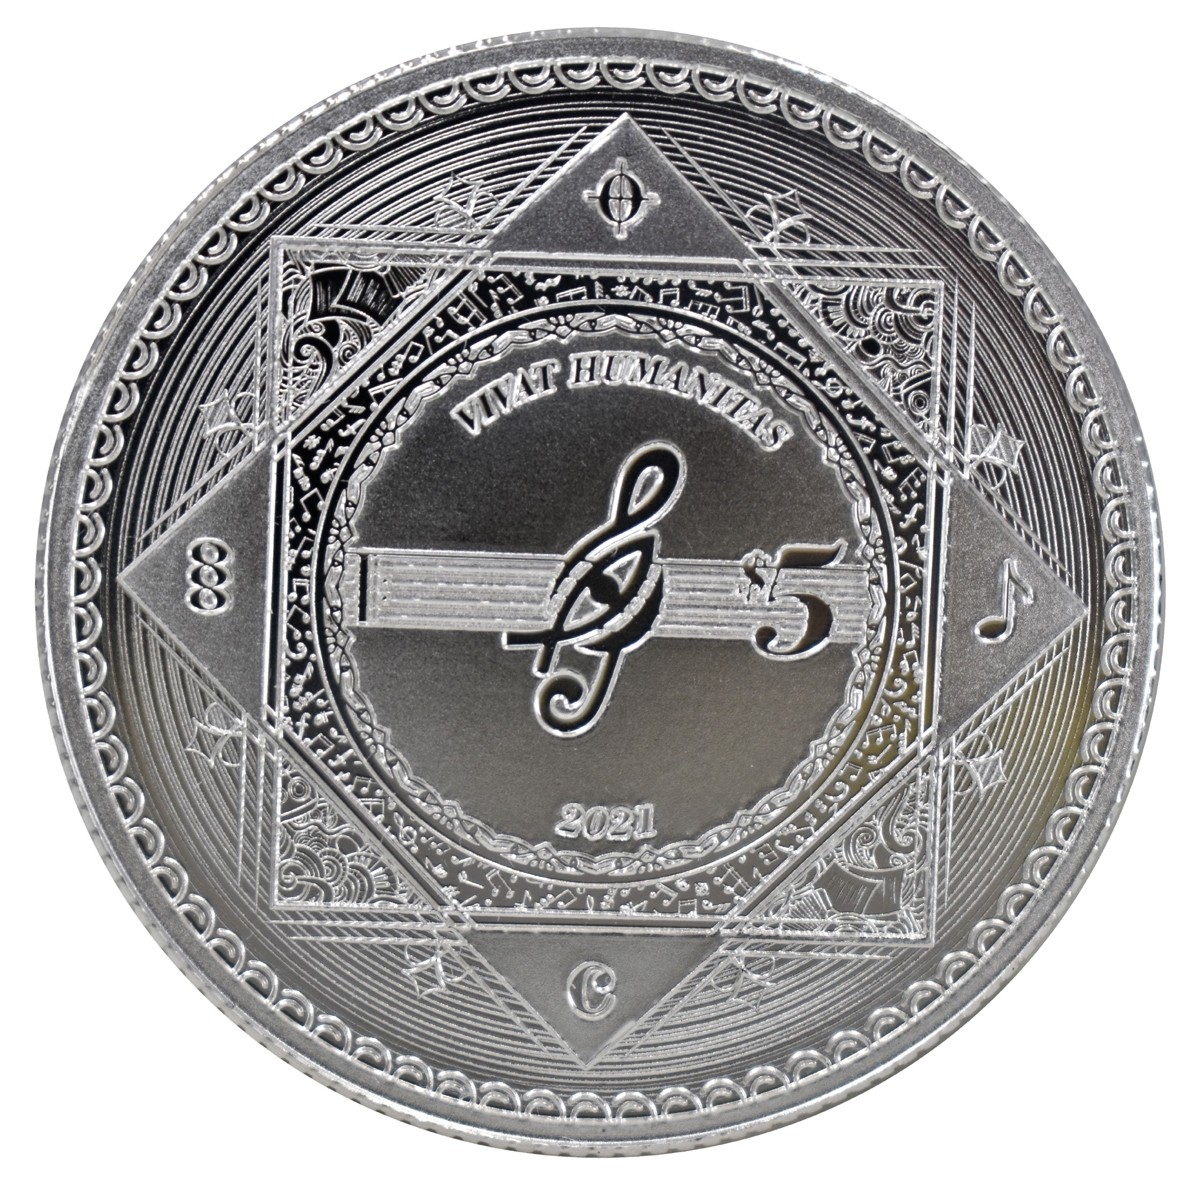 2021 1 oz $5 NZD Tokelau Silver Vivat Humanitas Coin BU (In Capsule) | European Mint